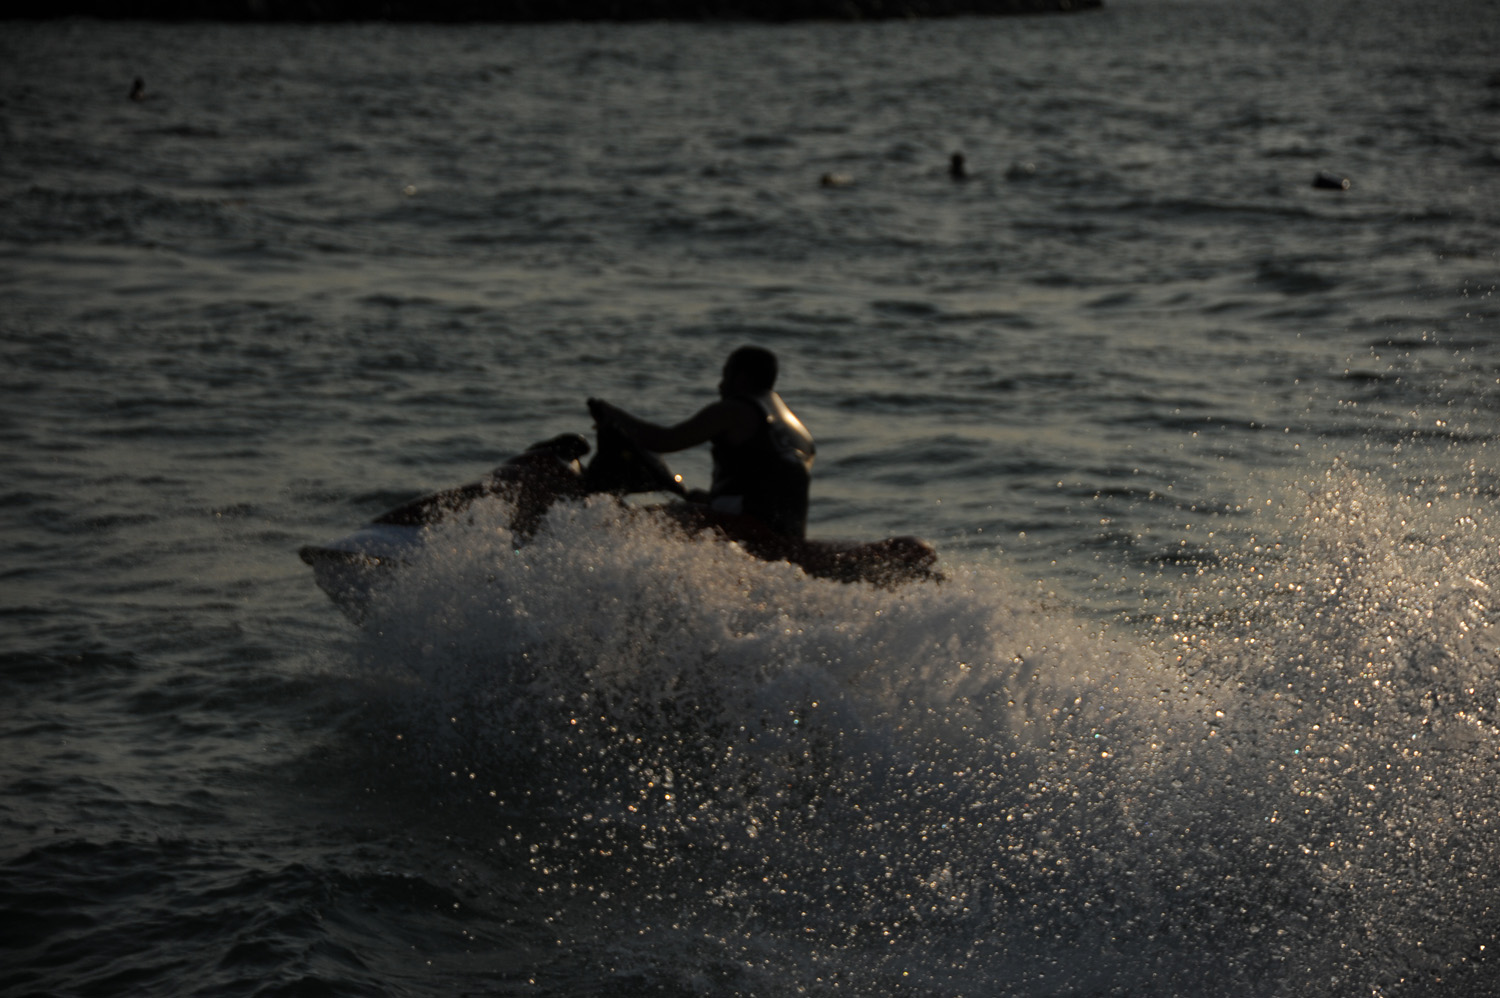 Water racing